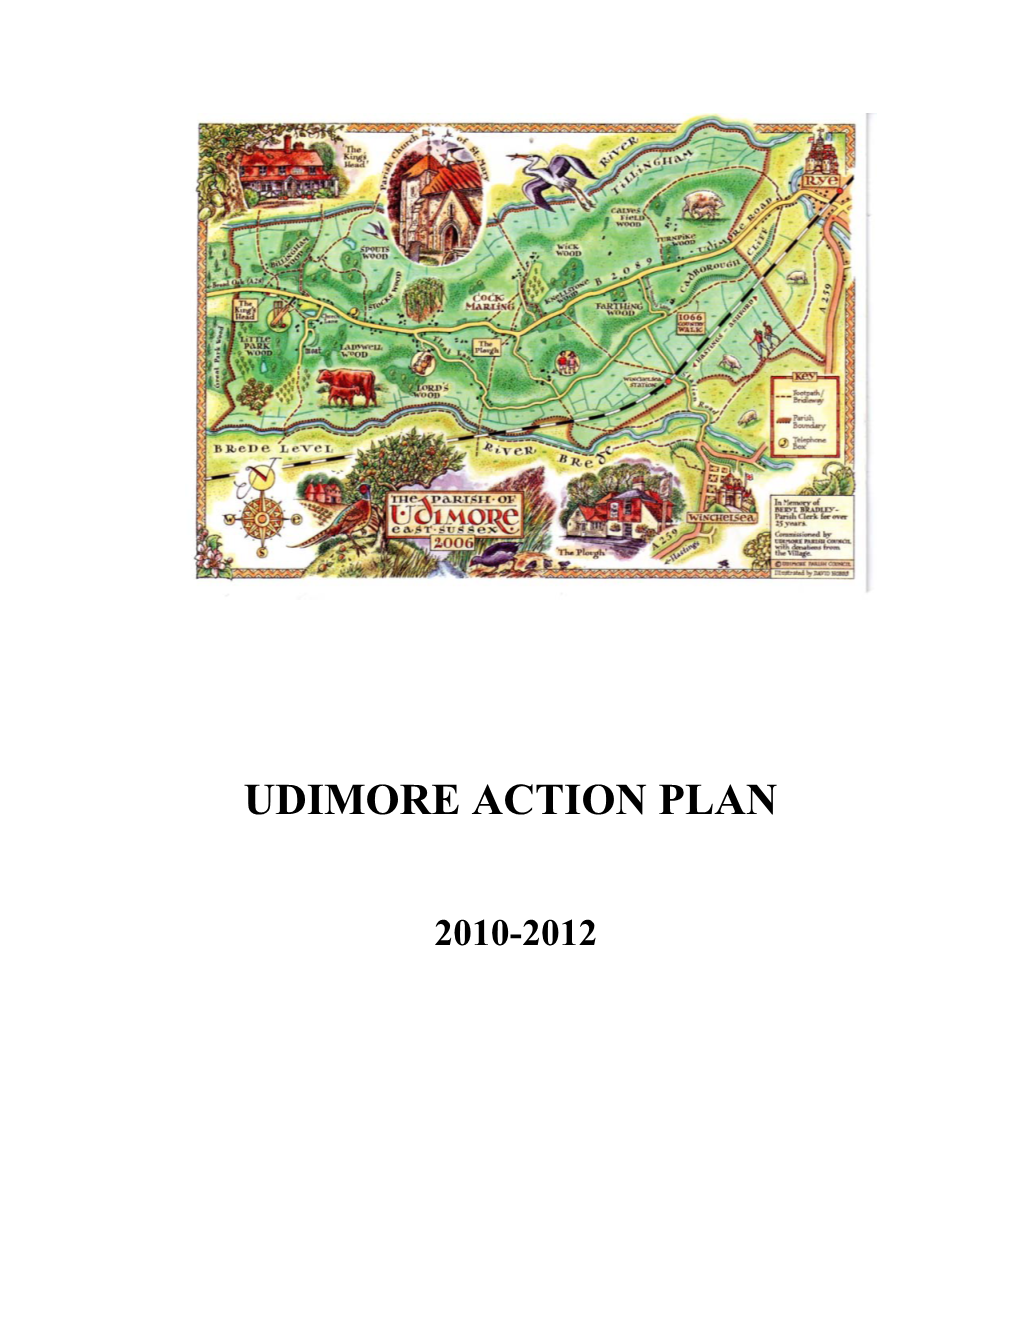 Udimore Action Plan